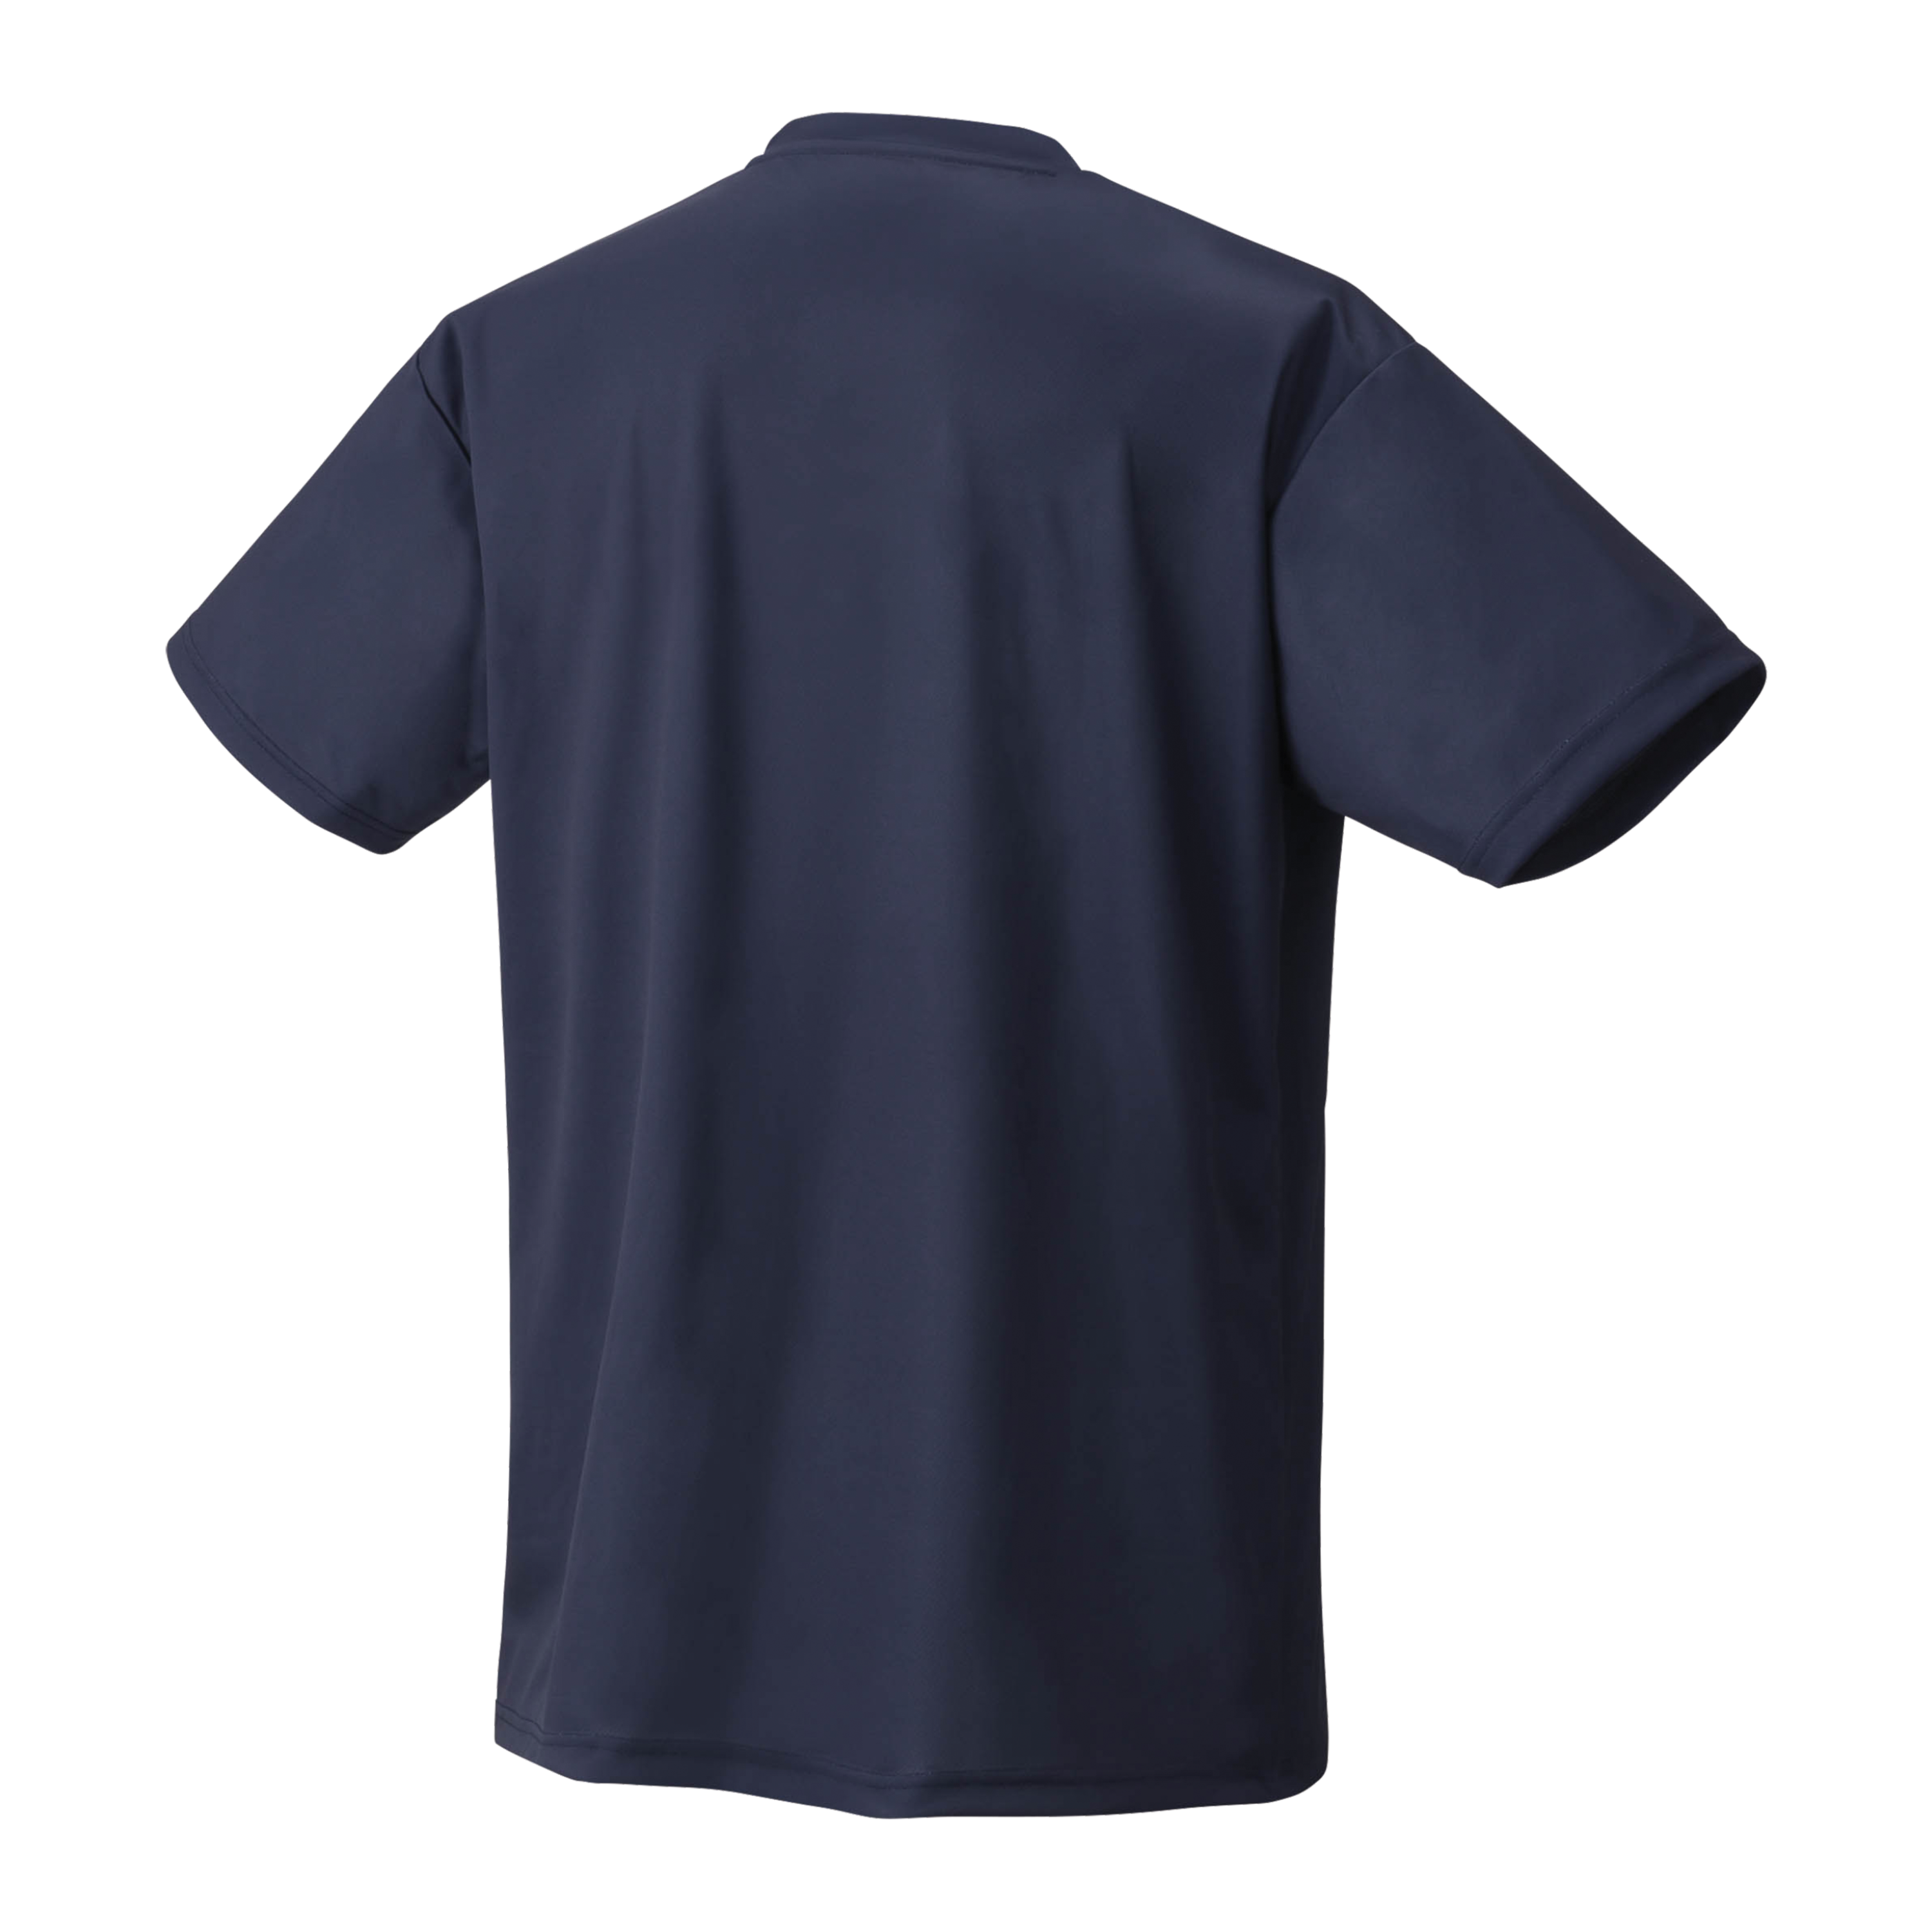 Yonex Badminton/ Tennis Sports Shirt YM0046EX Indigo Marine MEN'S